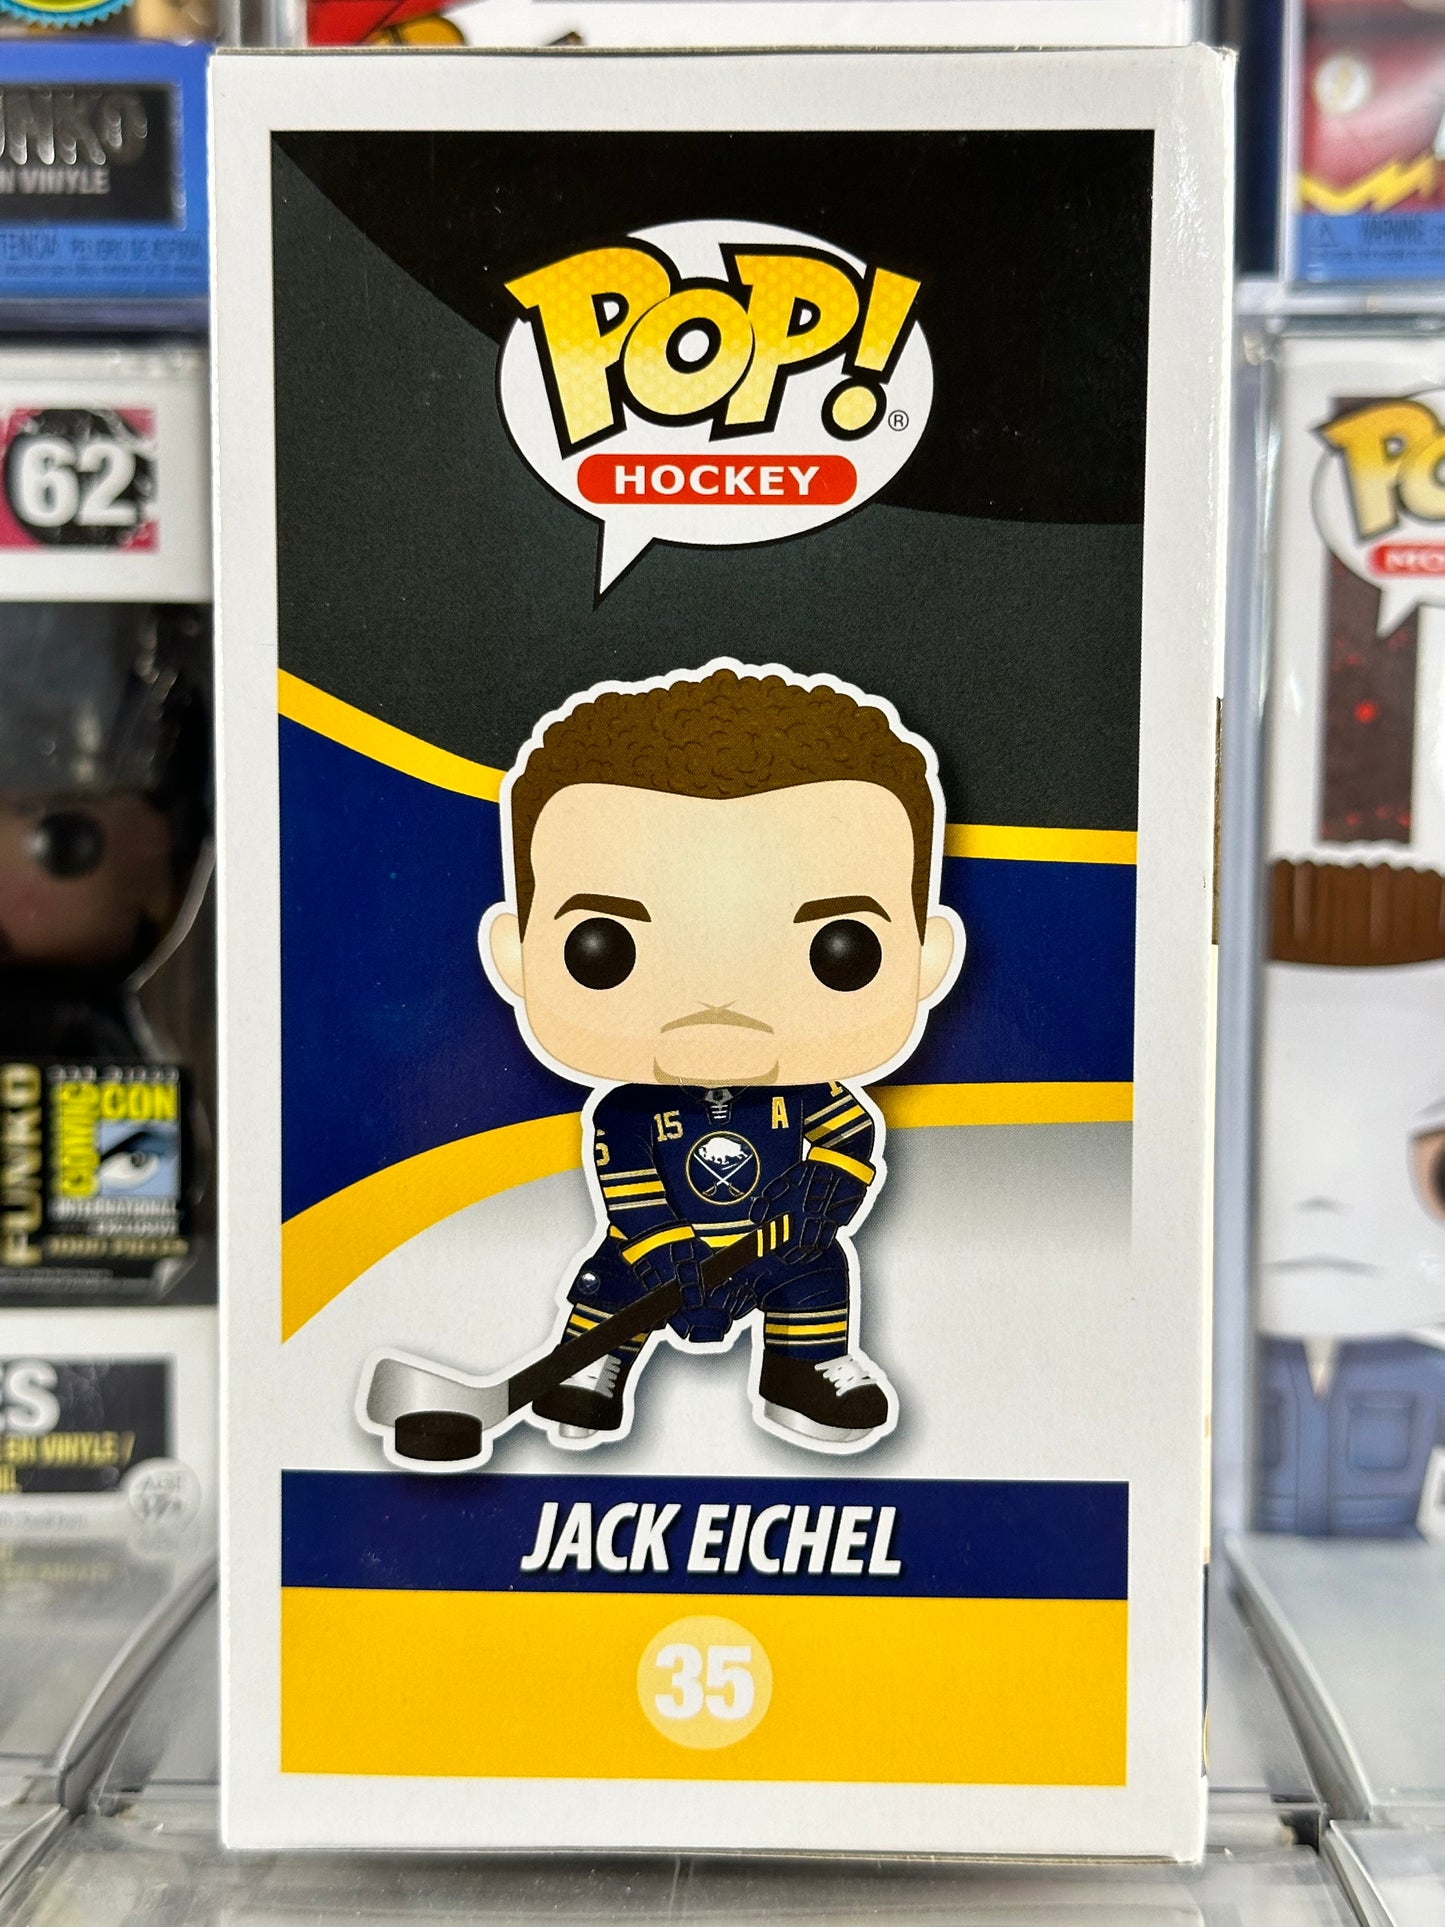 Pop Hockey - Jack Eichel (35)